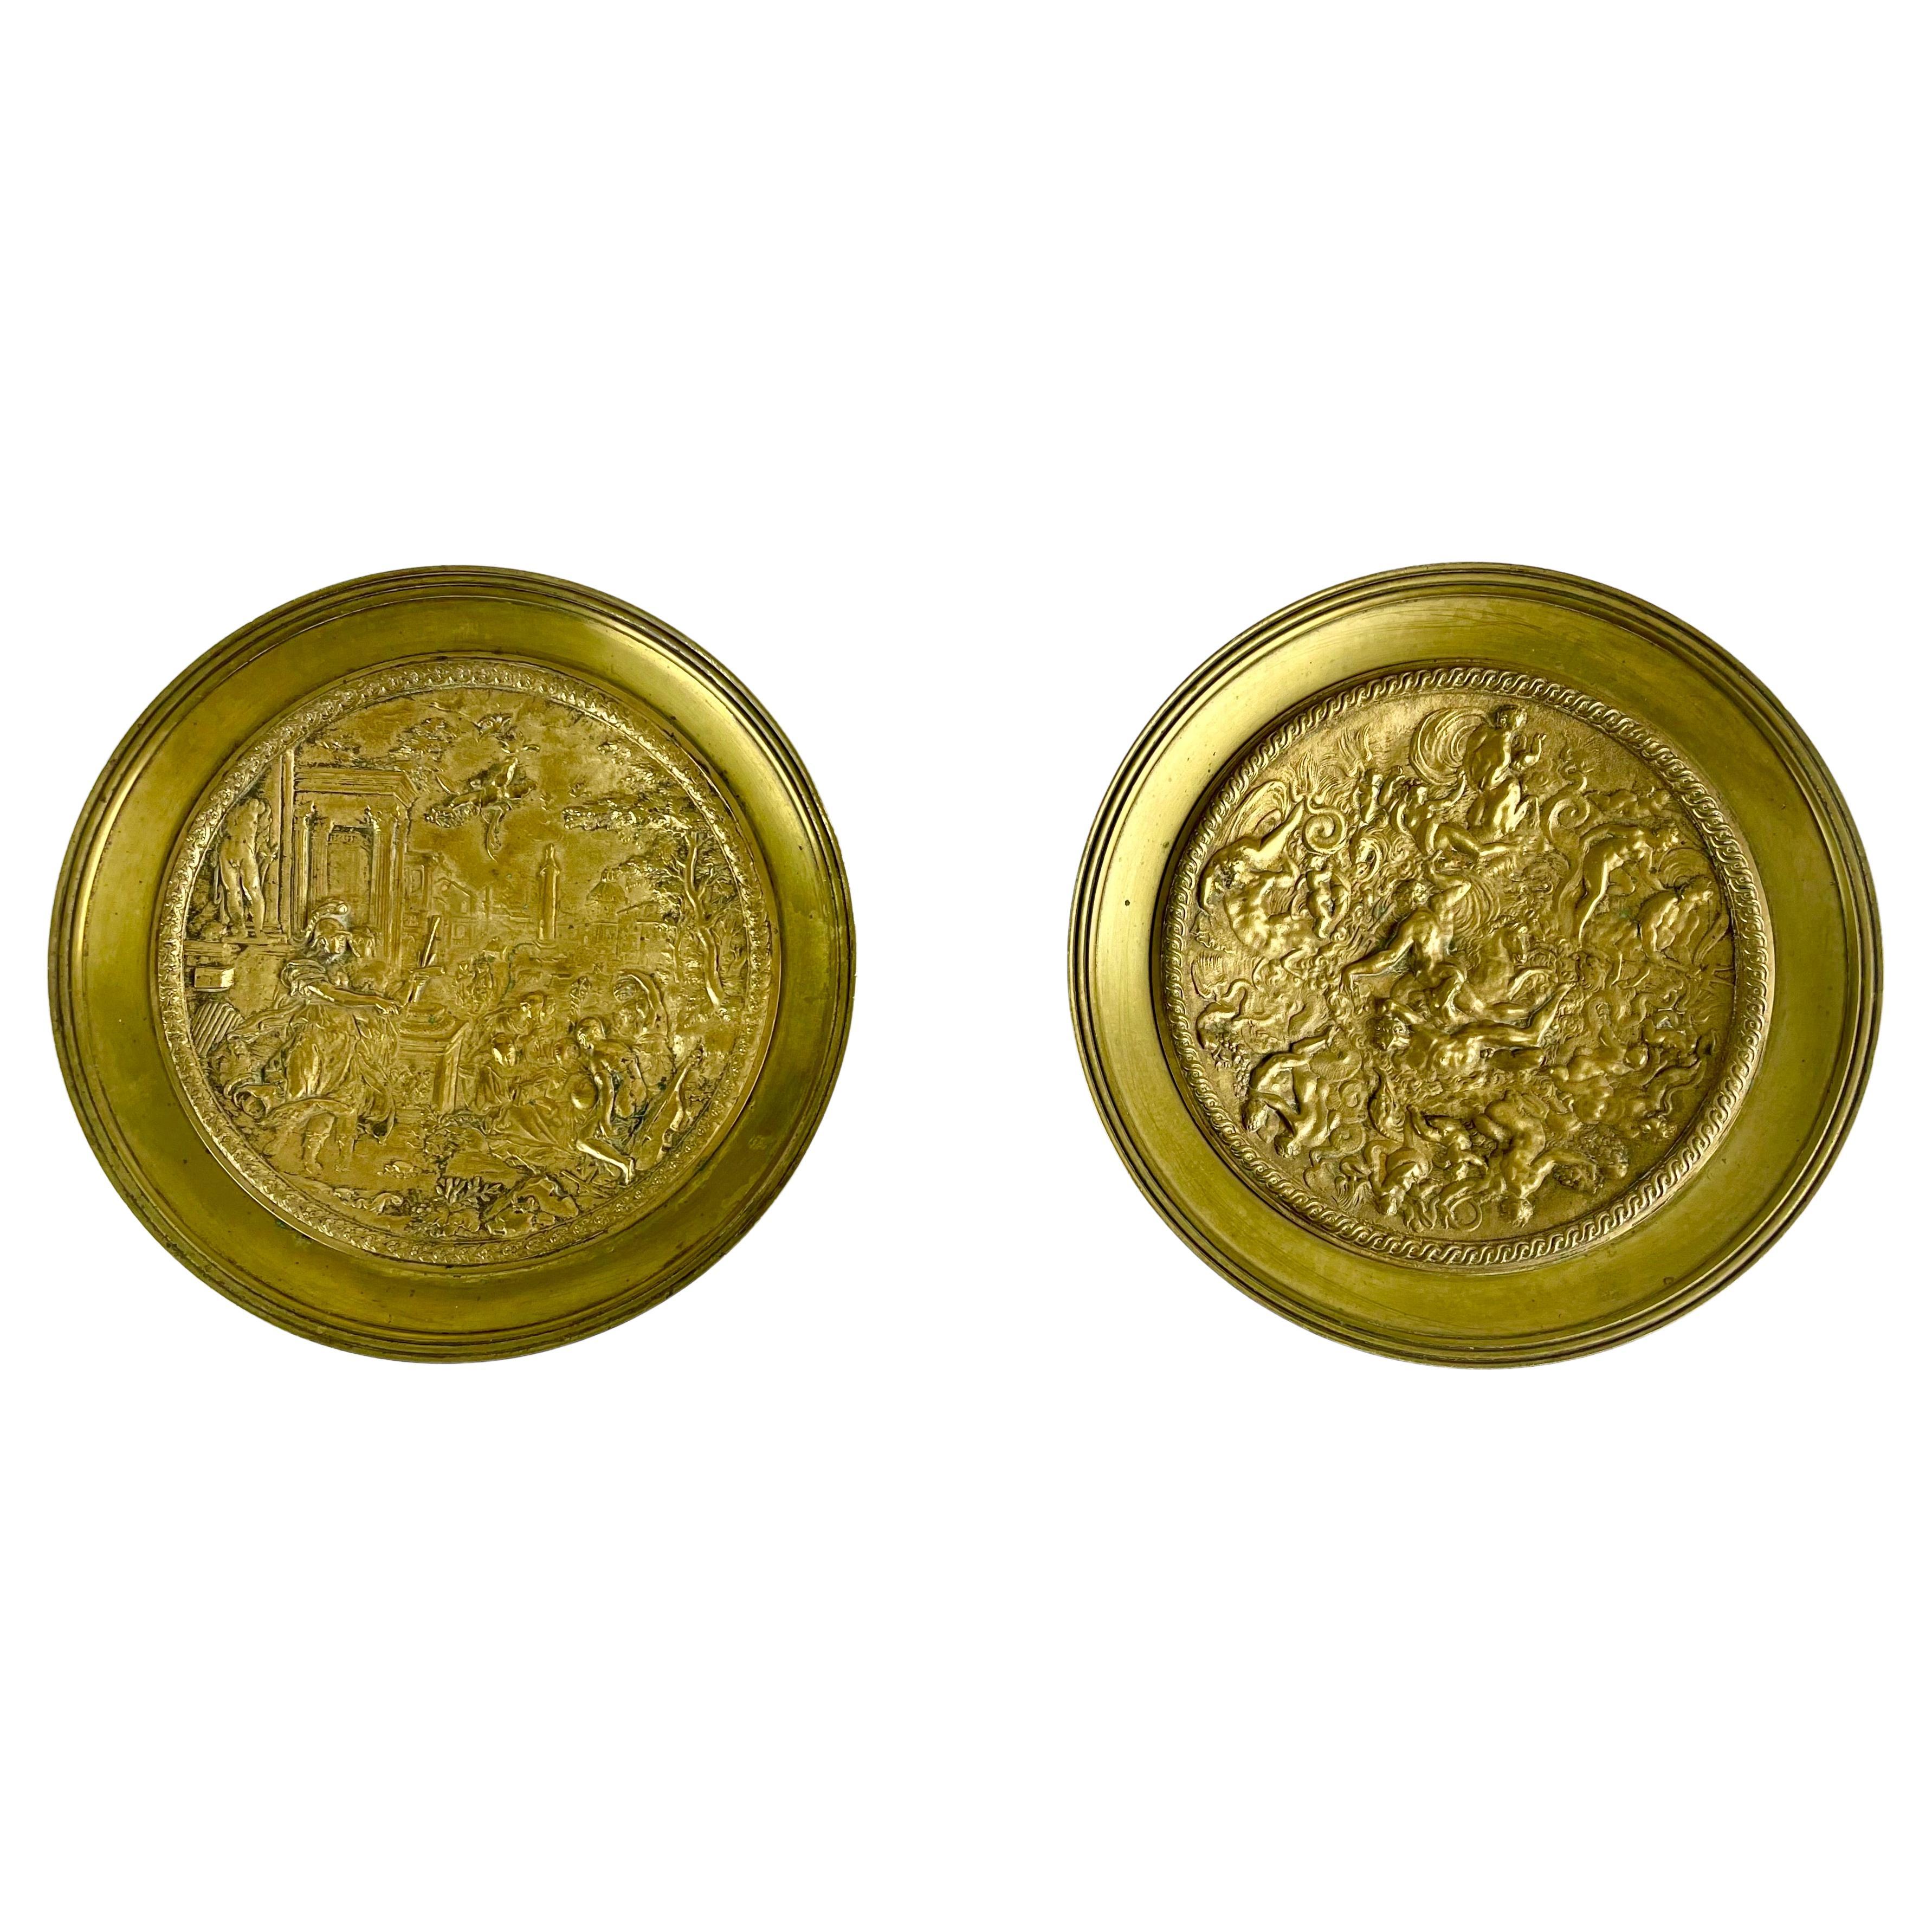 Tazza Neo Renaissance Pair of Cups Gilt Bronze Decor Deities of Antiquity 19thC. For Sale 5